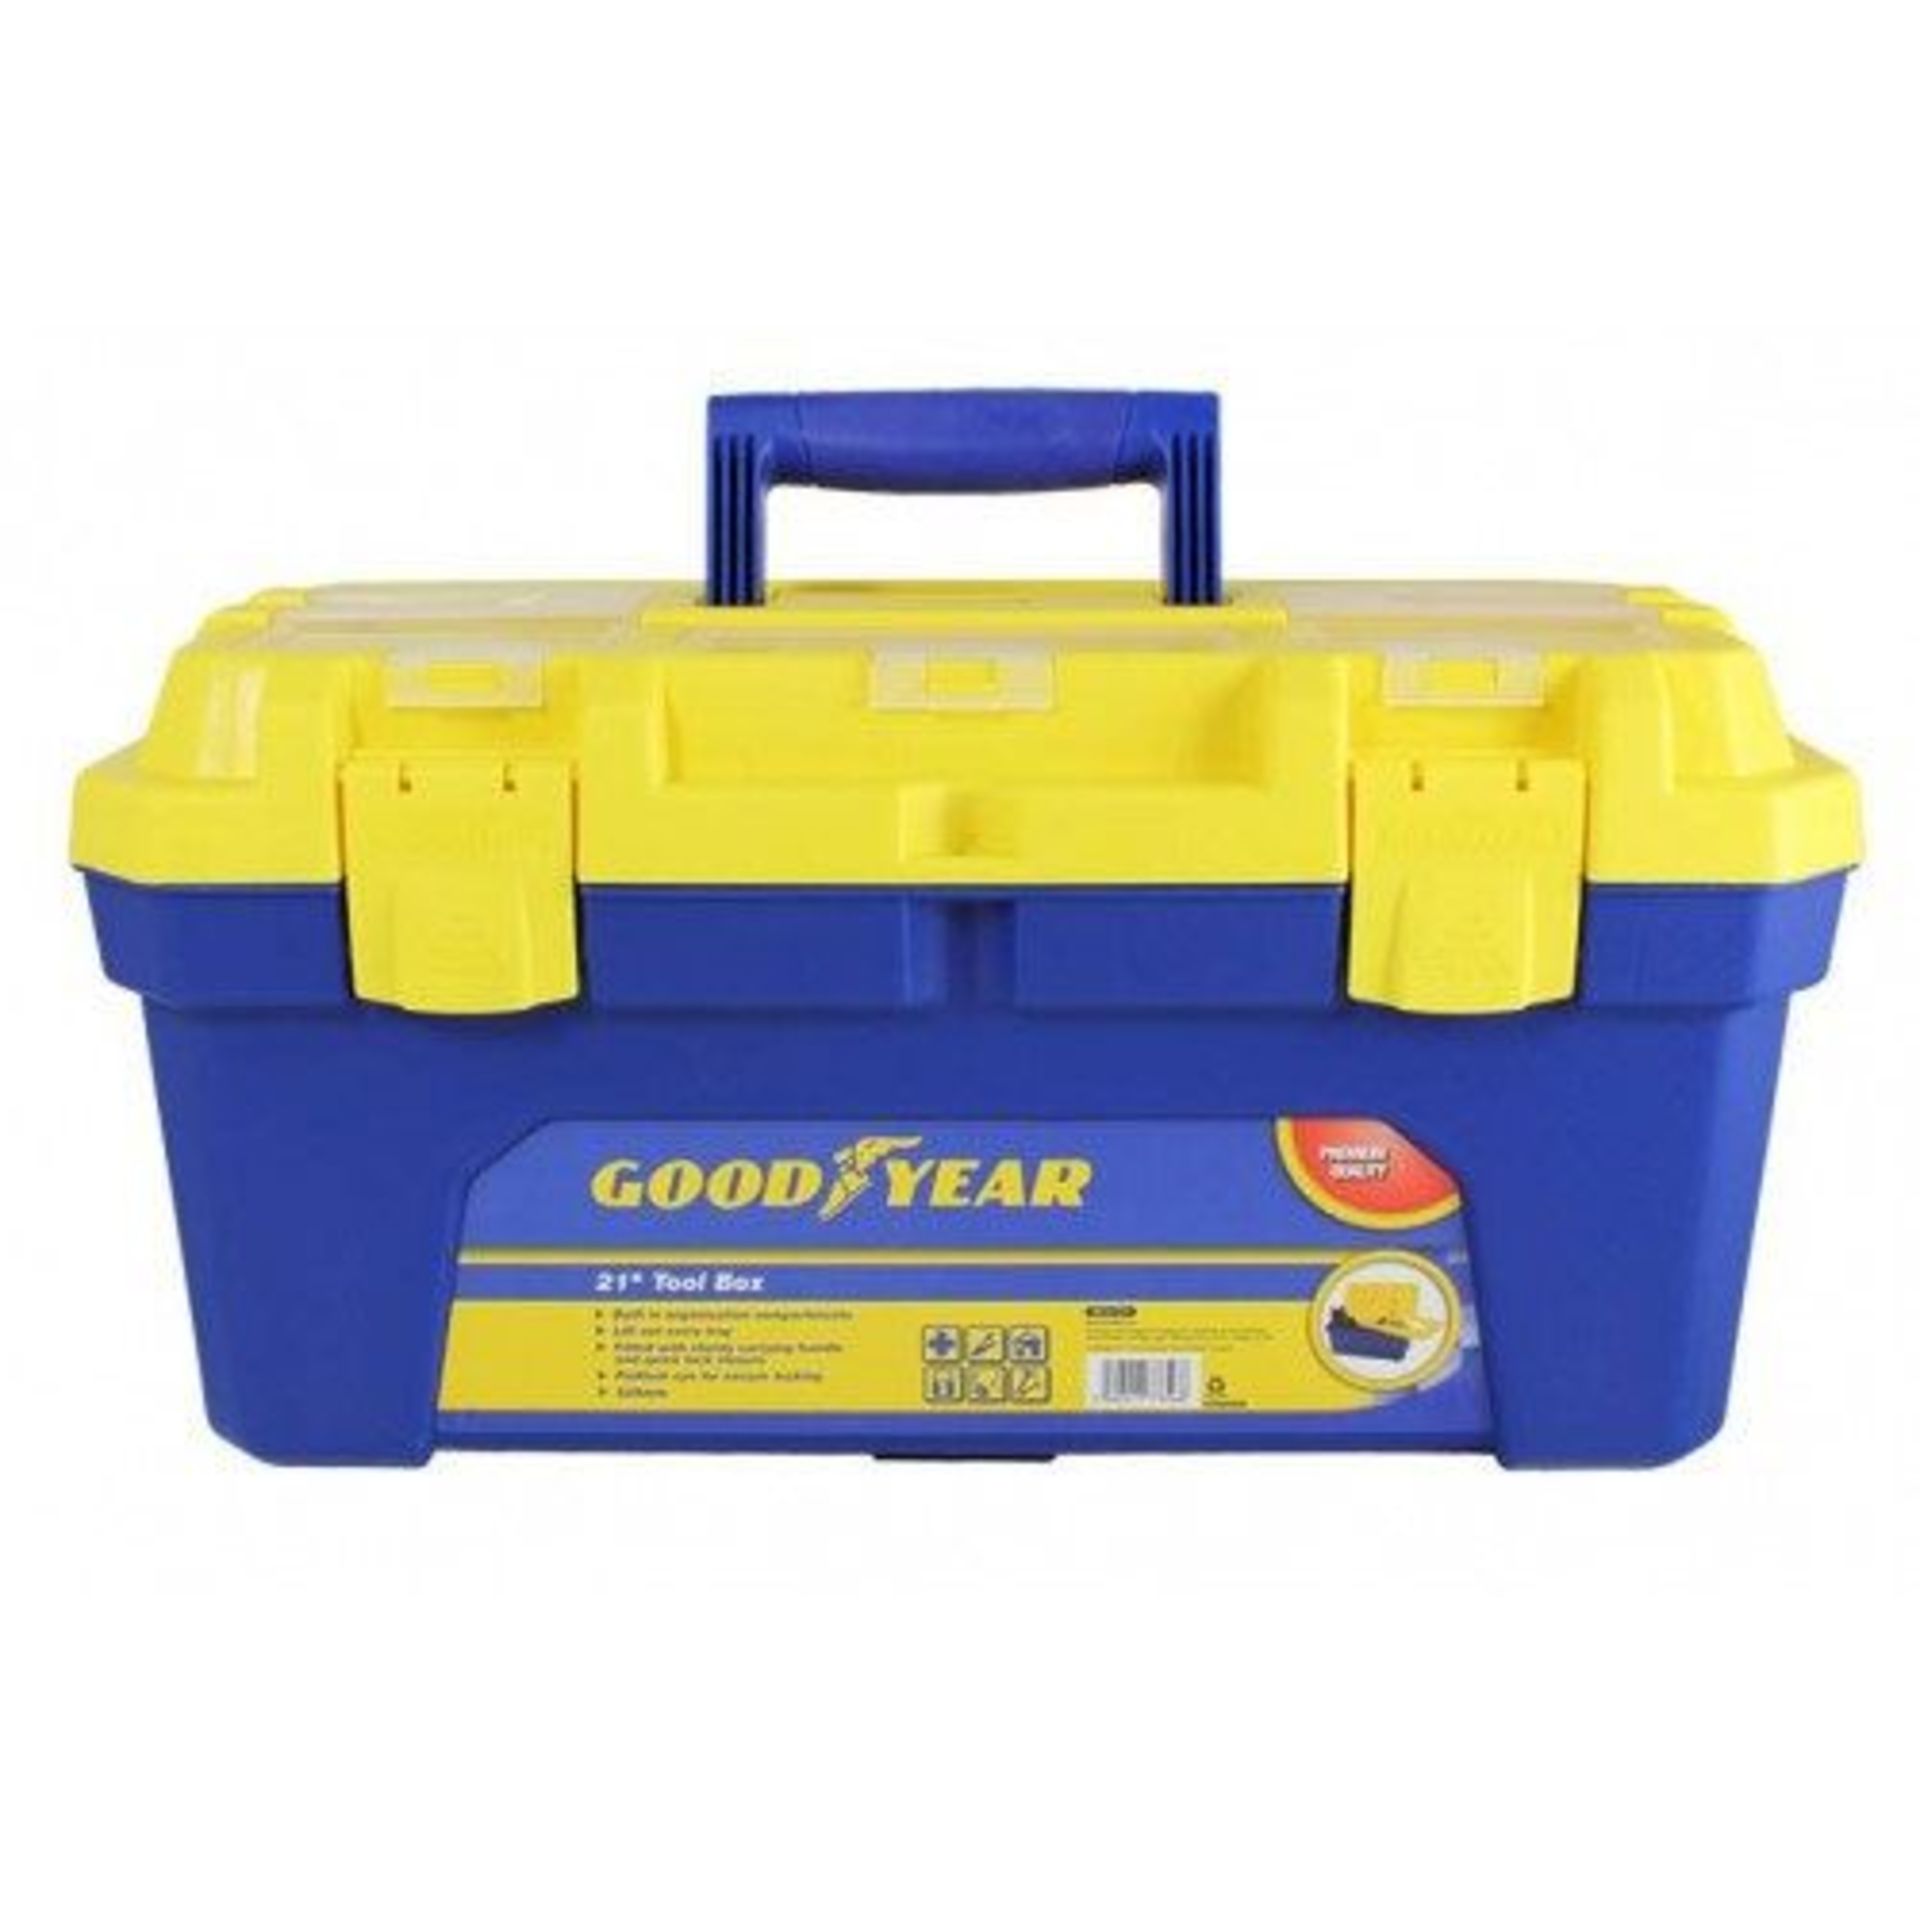 Brand new Goodyear large tool storage box